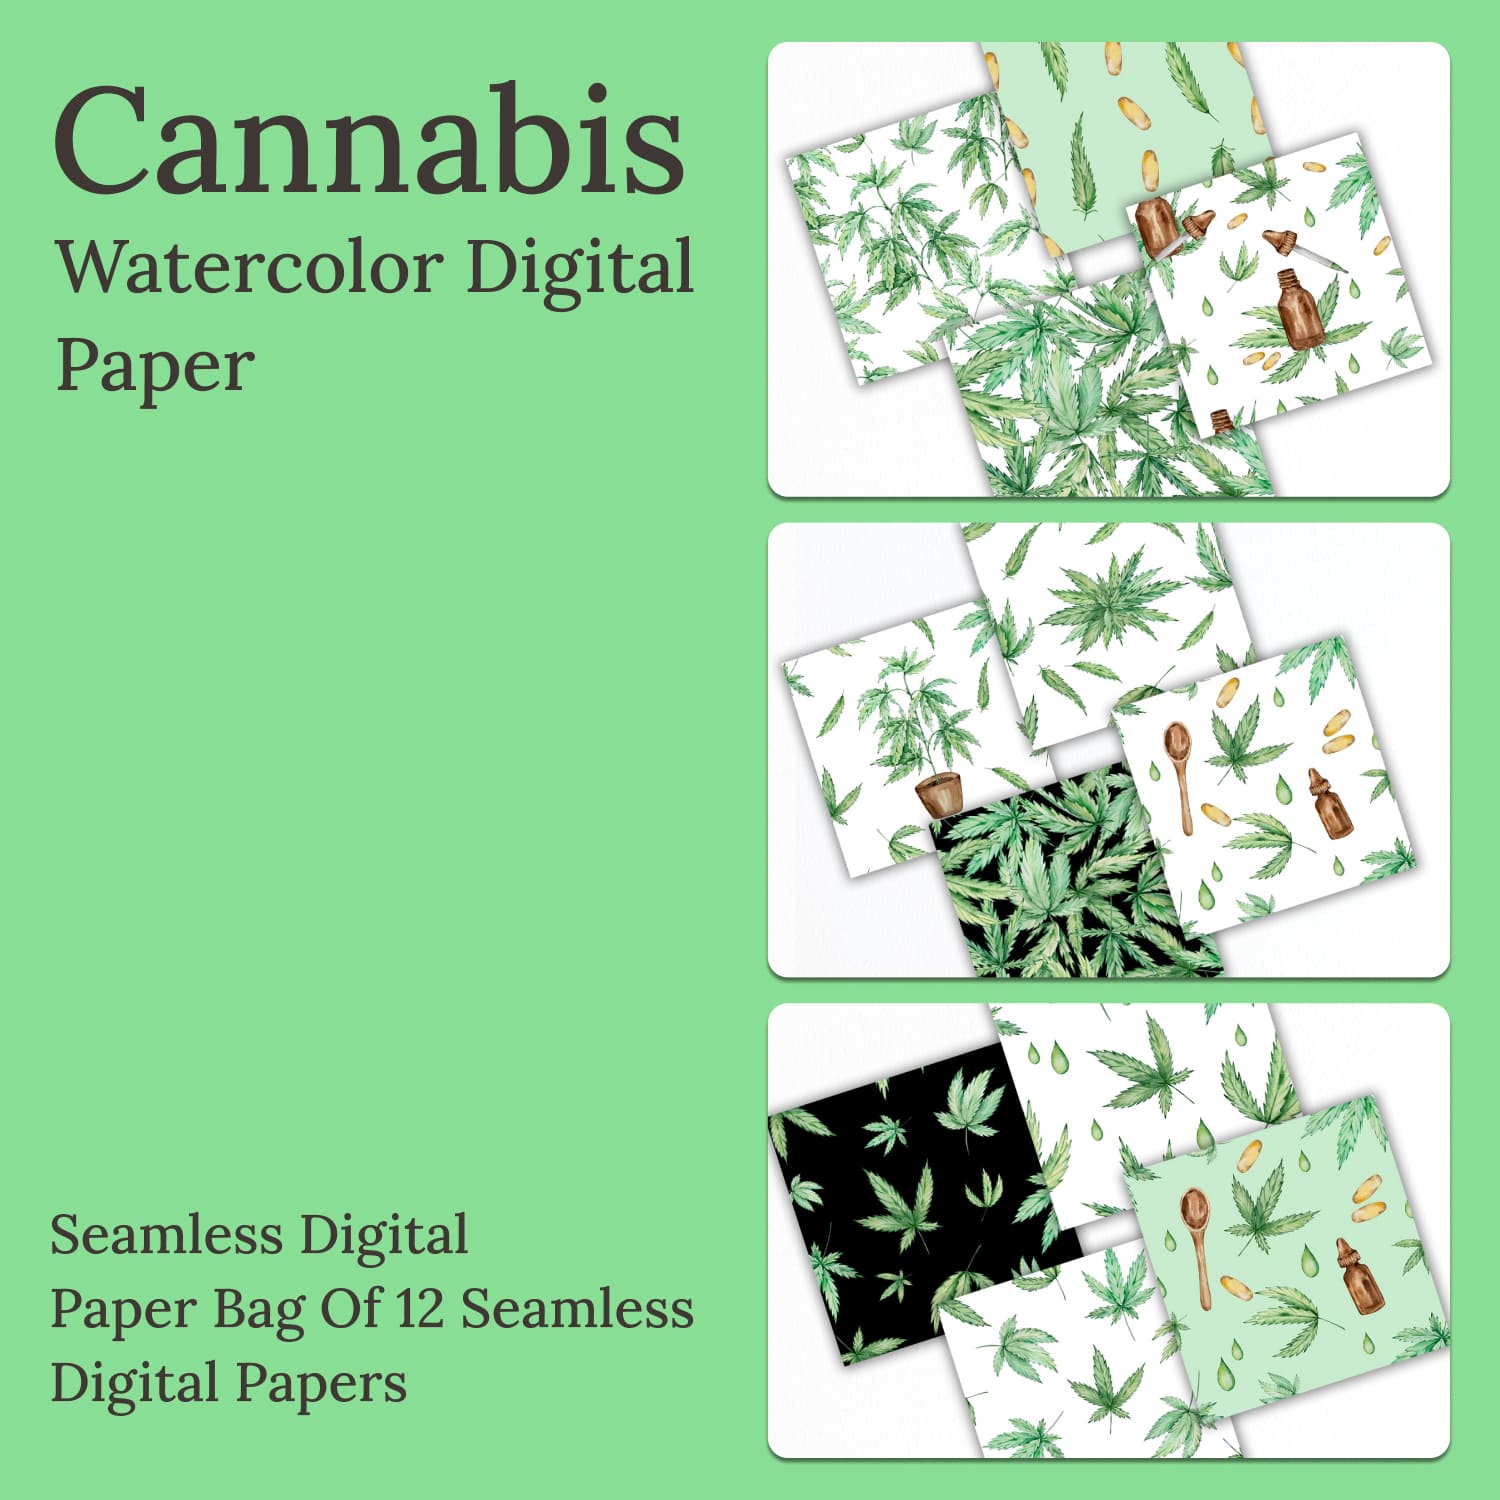 Cannabis watercolor digital paper - main image preview.